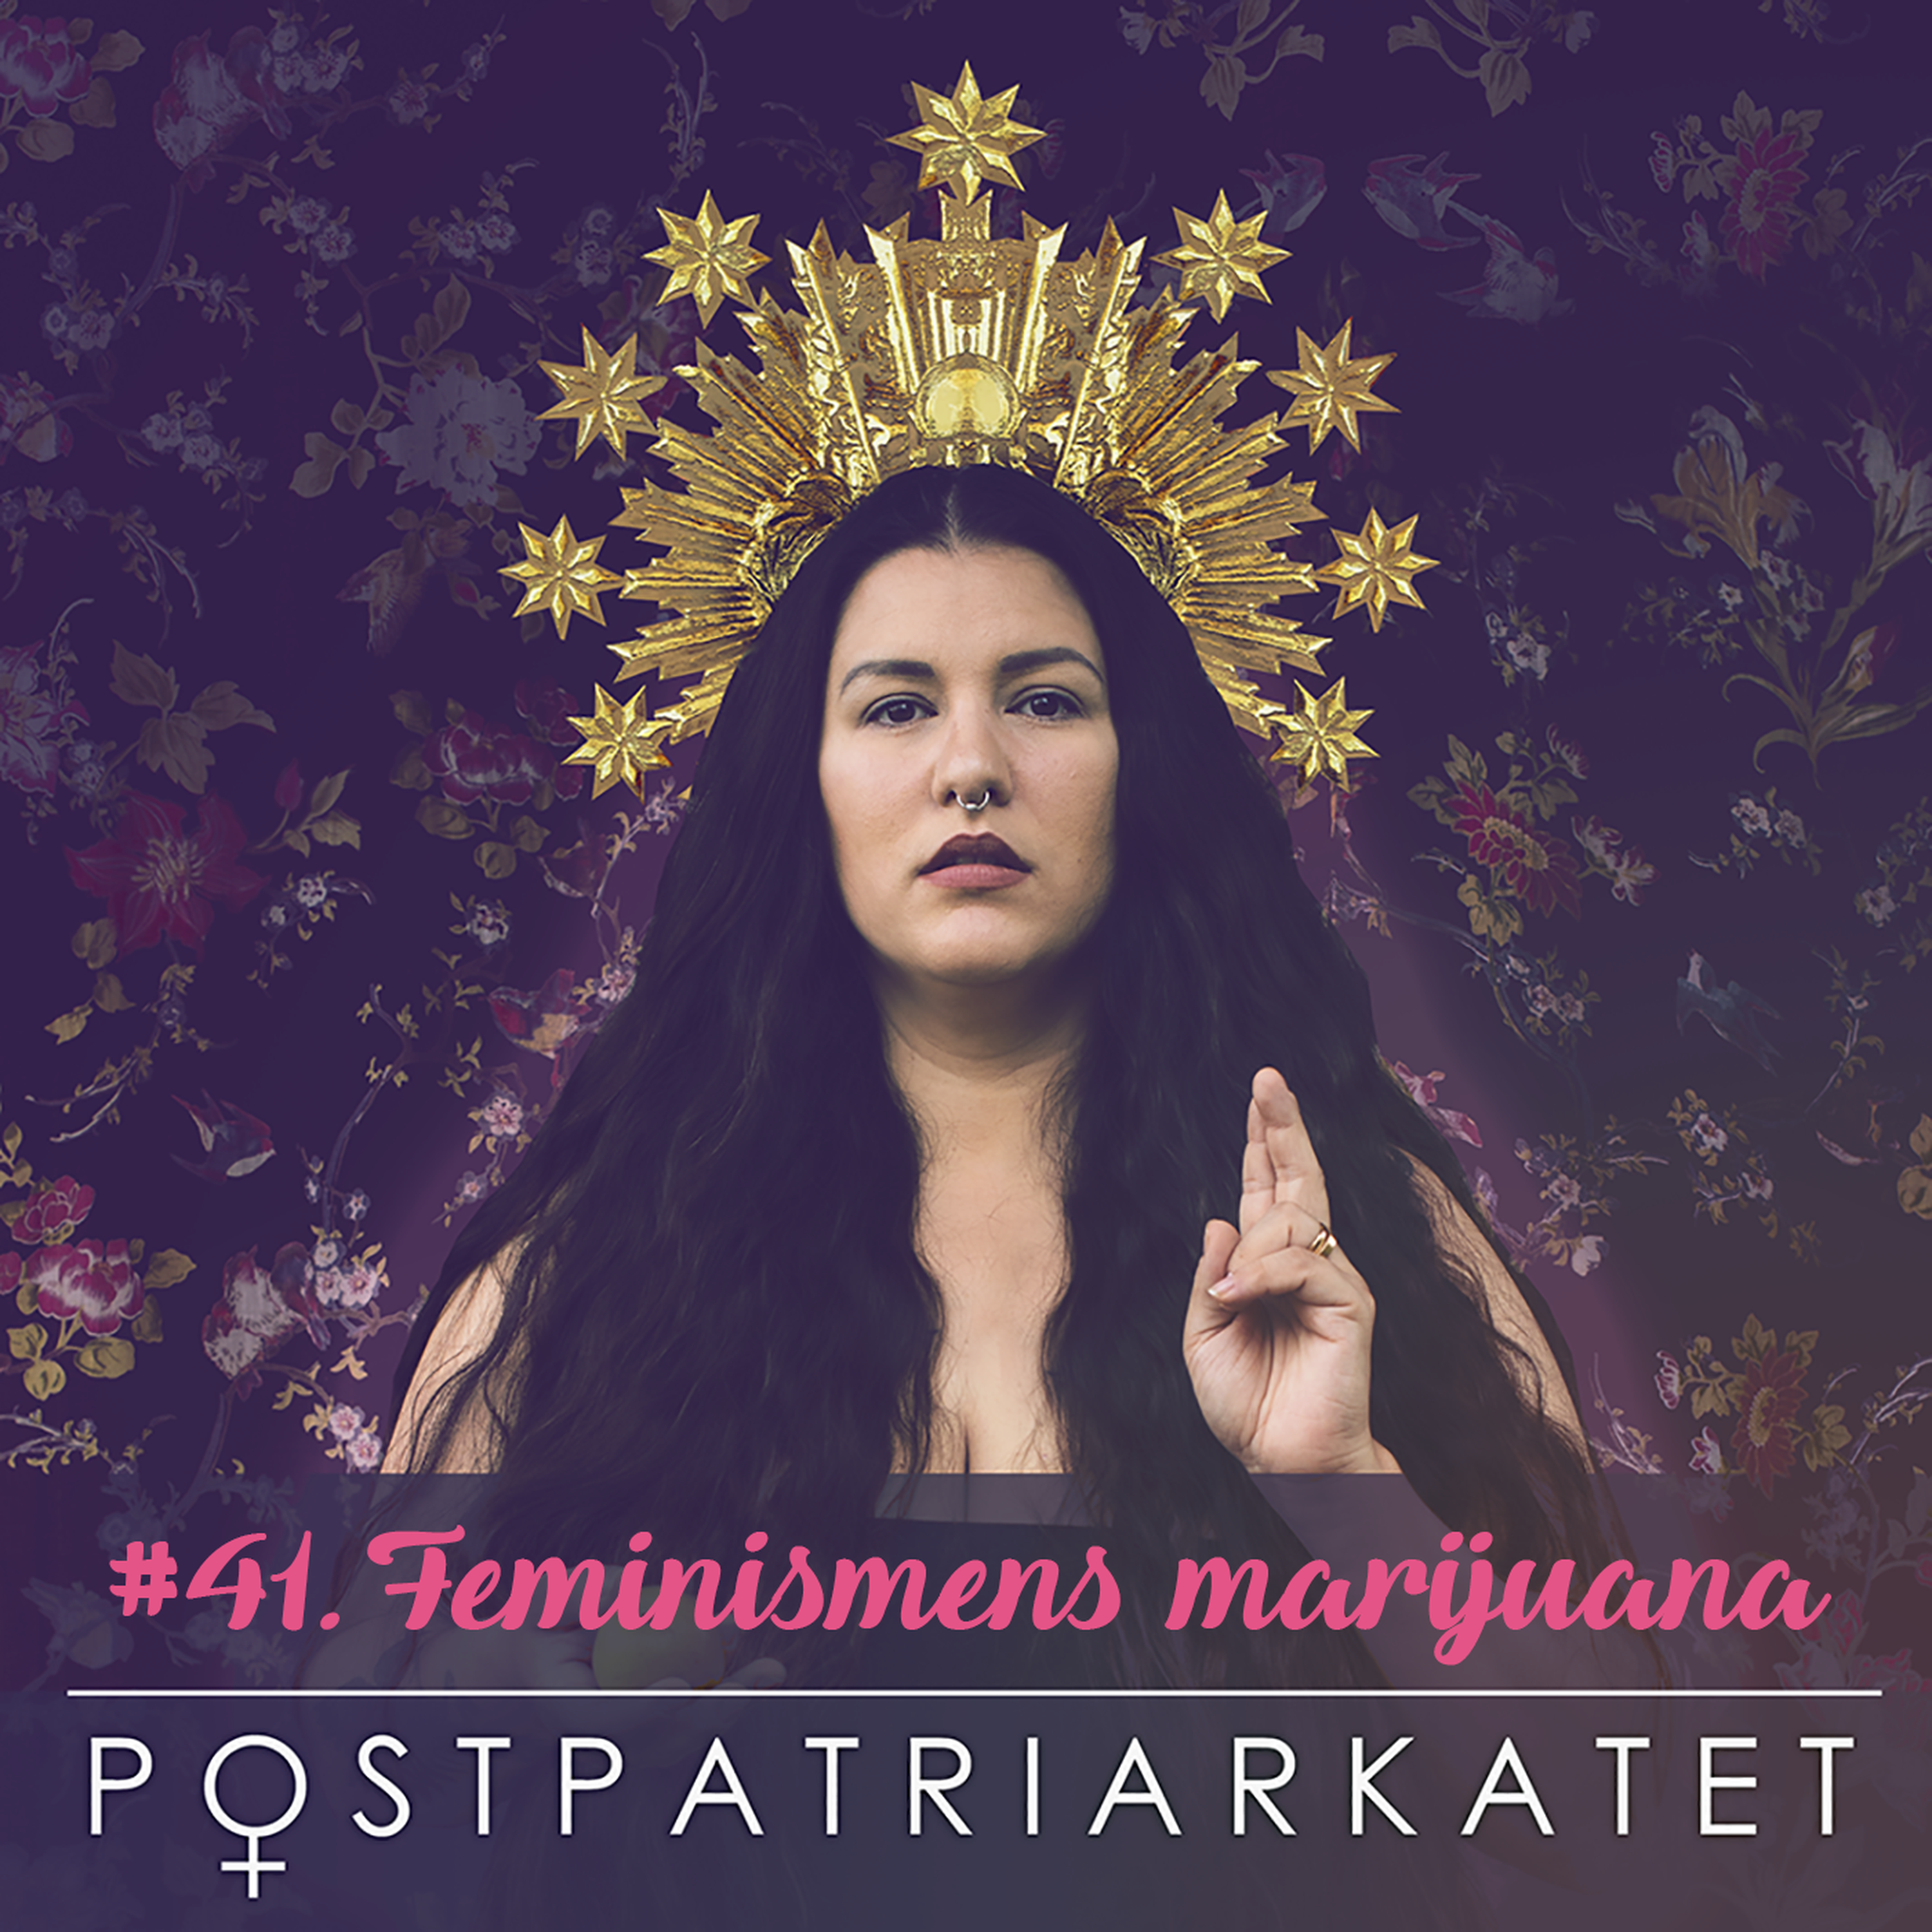 Feminismens marijuana - #41